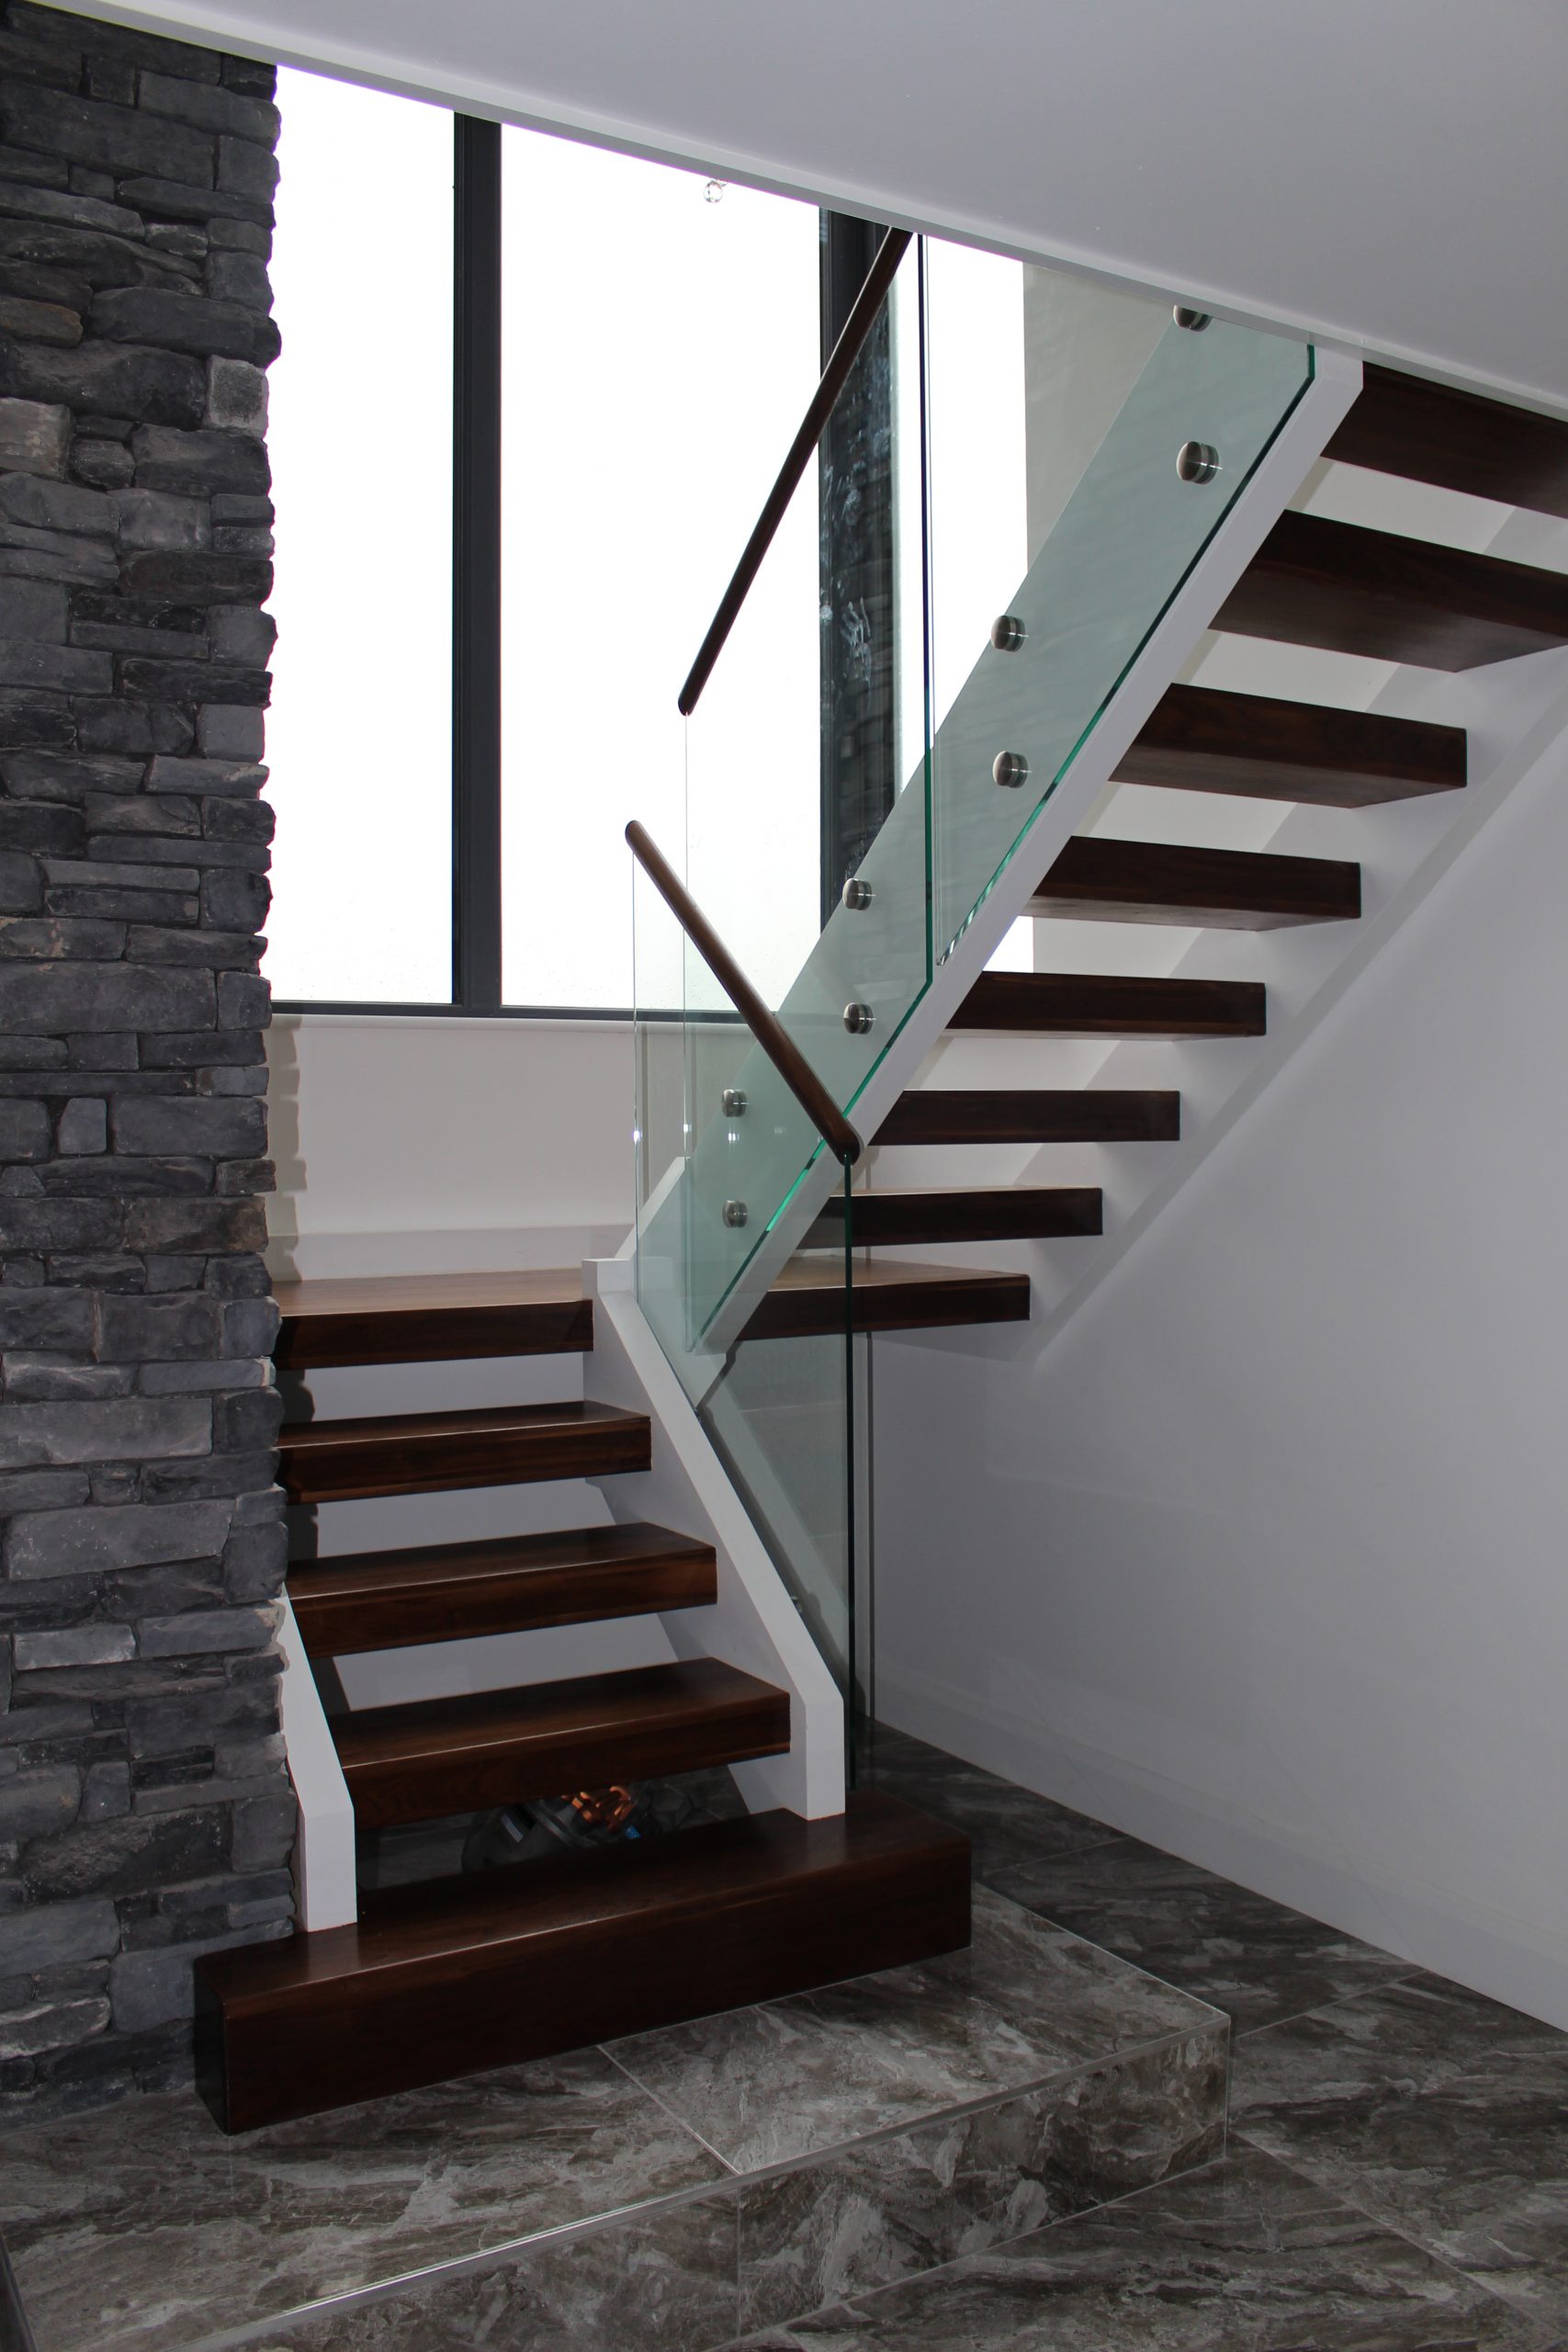 walnut stair with glass balustrade